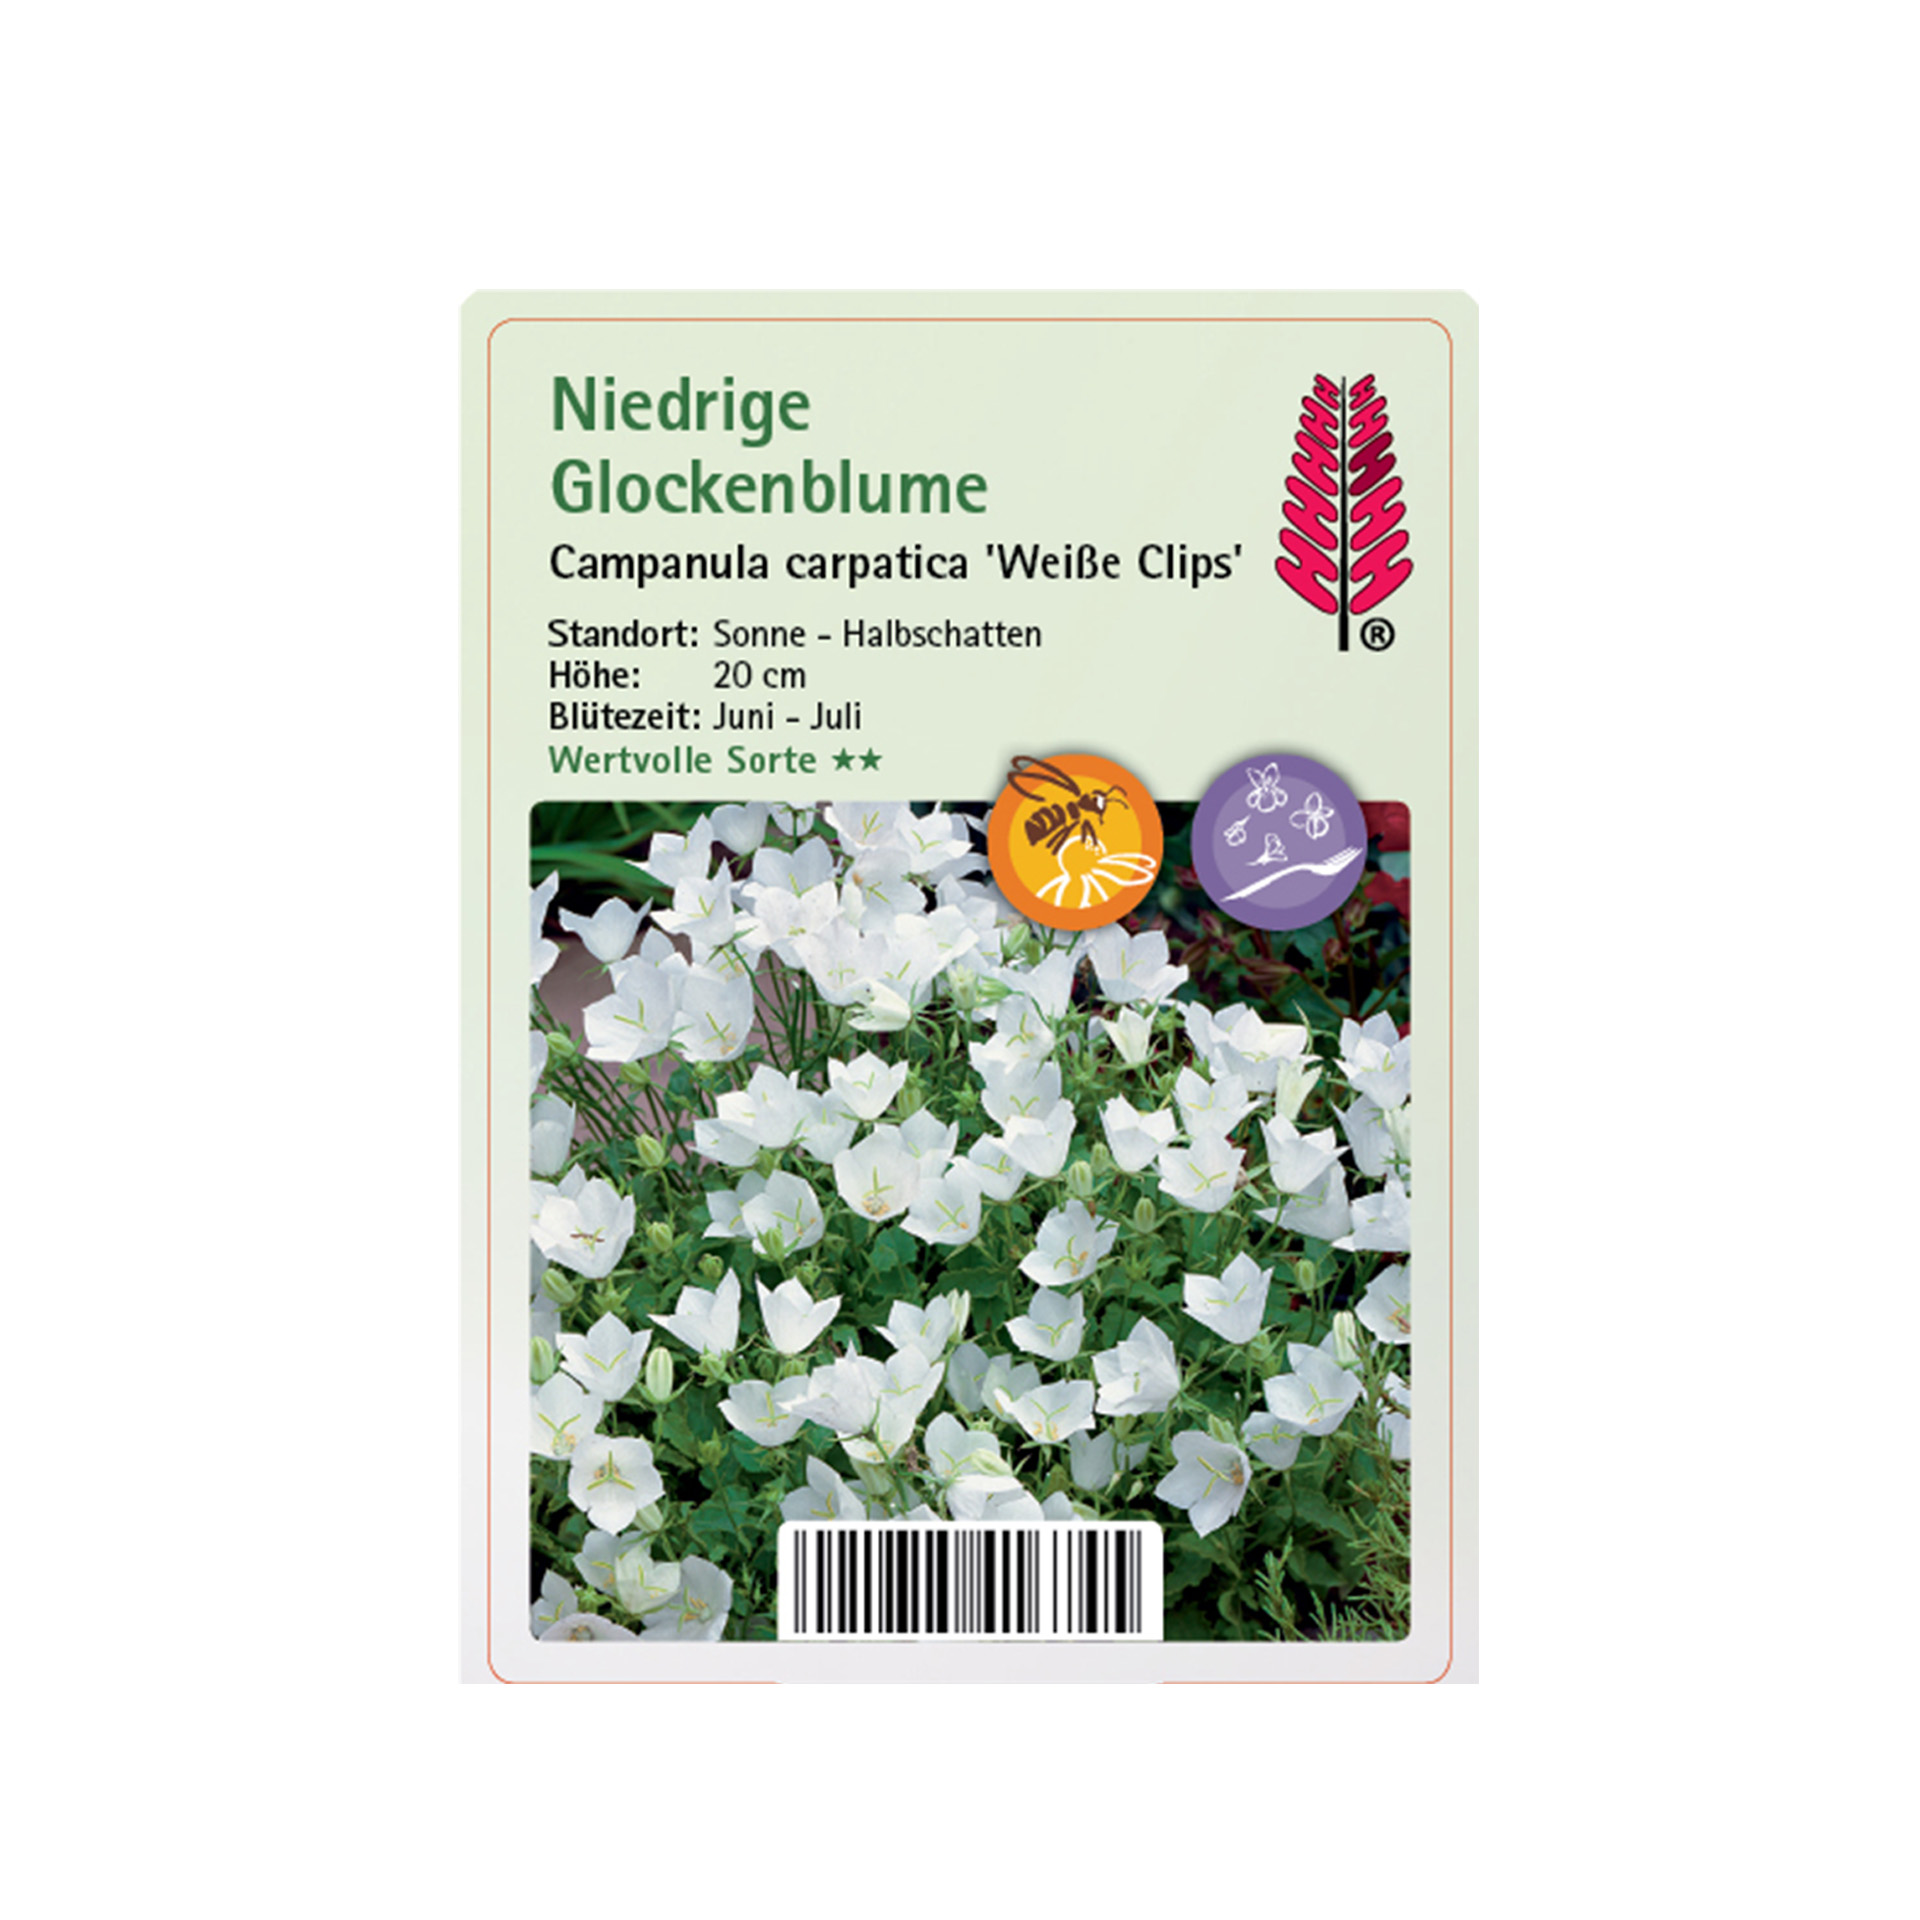 Niedrige Glockenblume - Campanula carpatica 'Weiße Clips', 9cm Topf